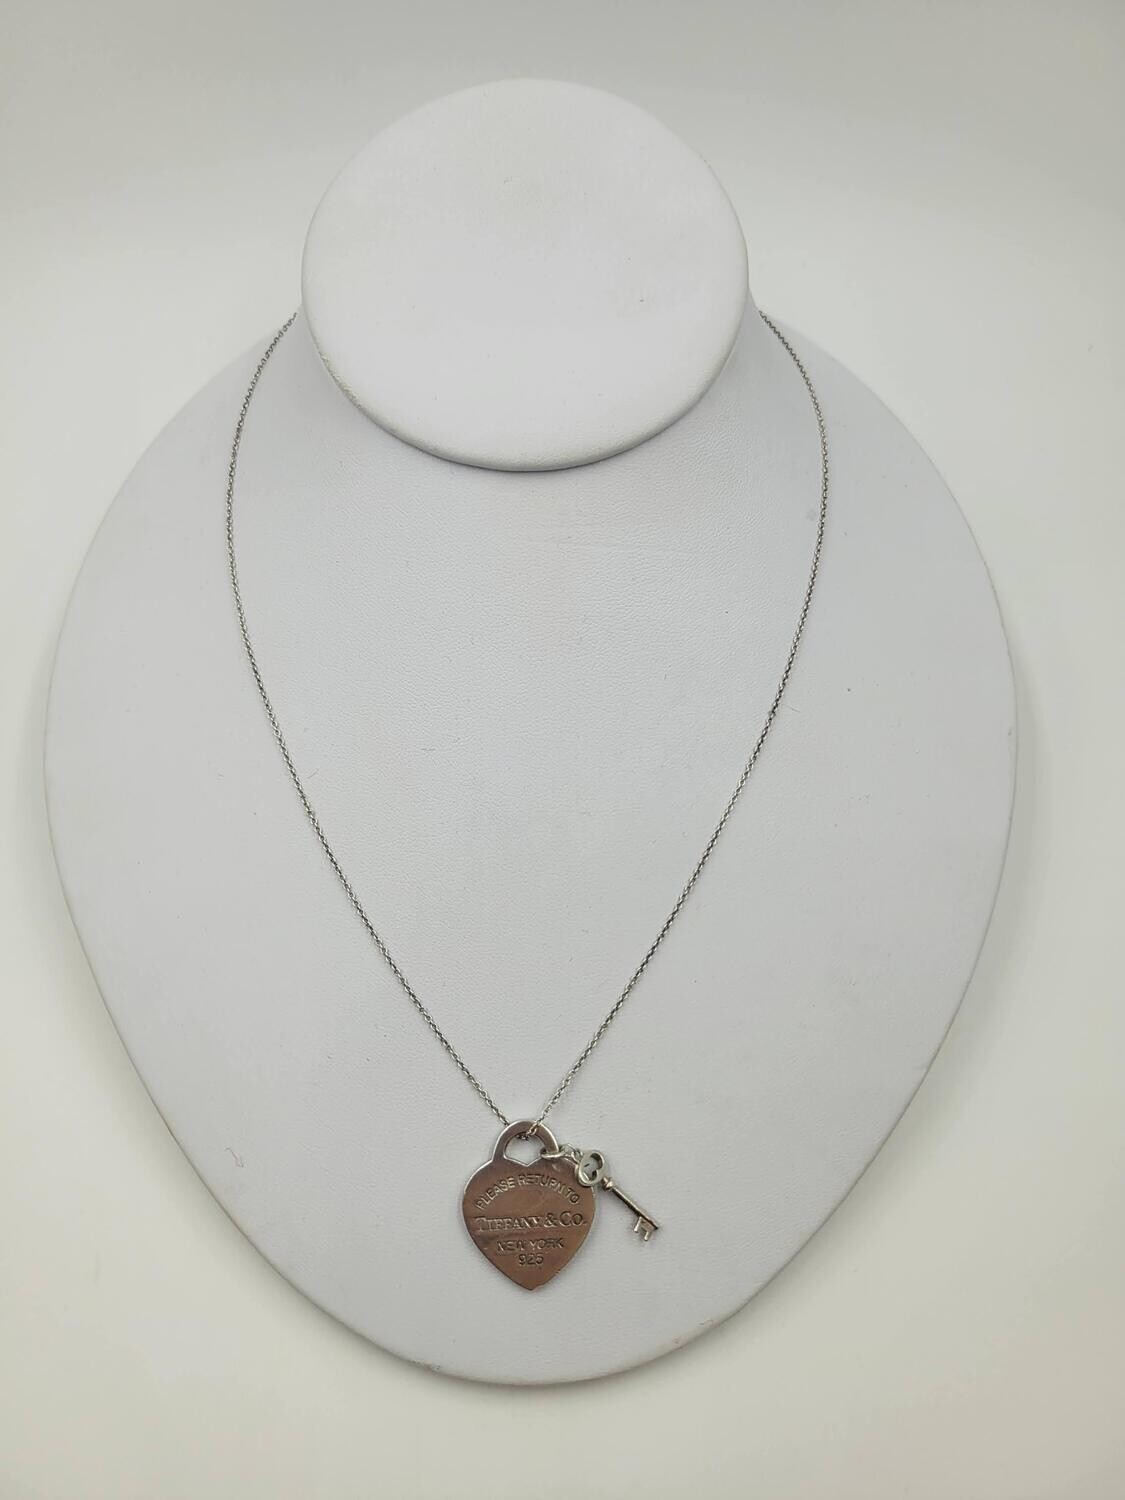 Tiffany Heart & Key Necklace 925 Sterling Silver